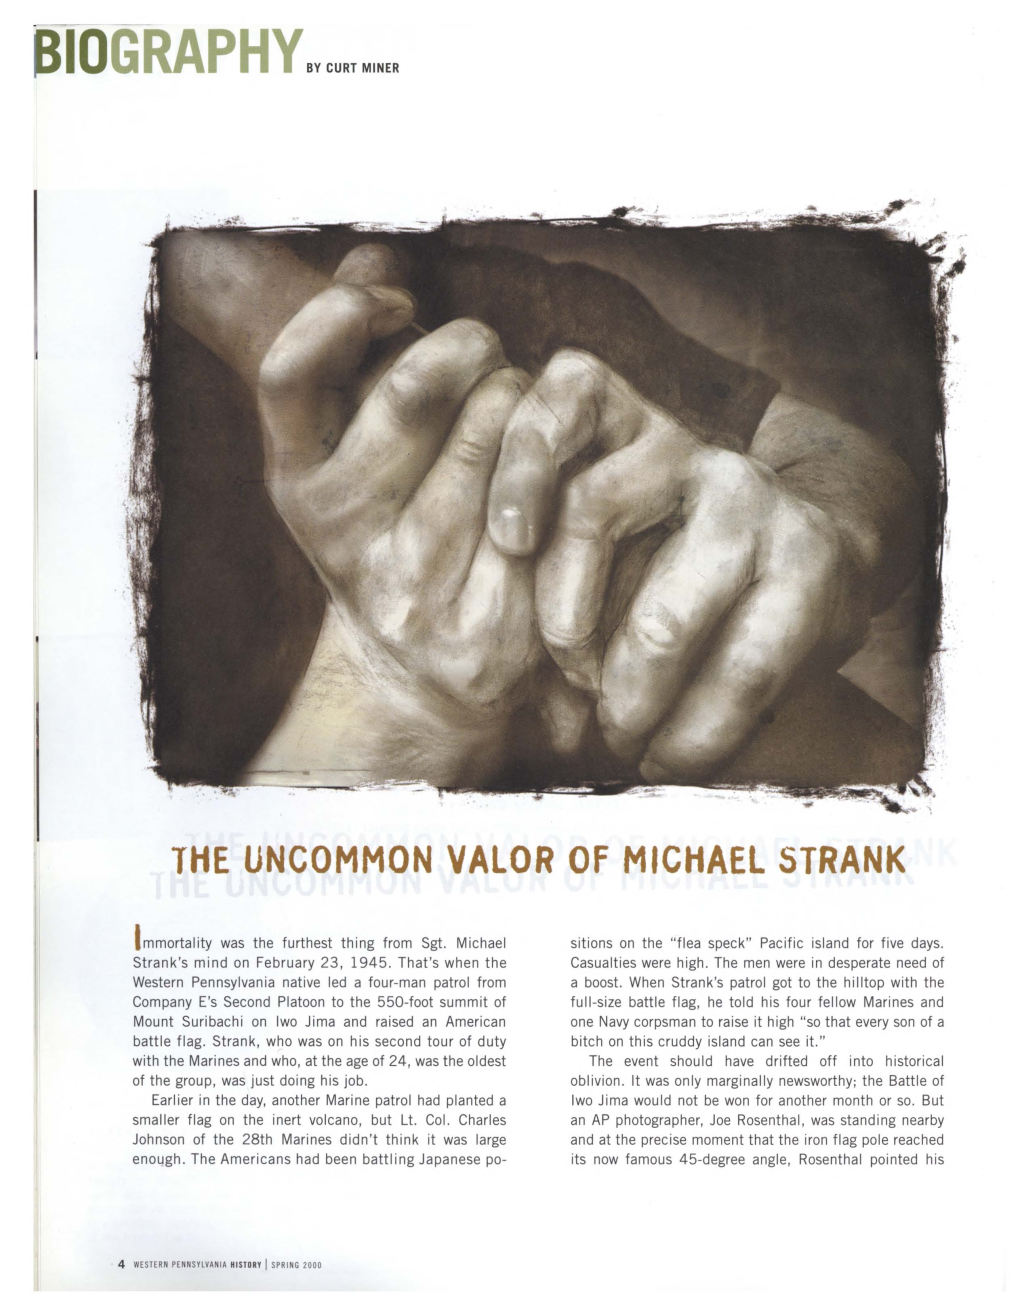 The Uncommon Valor of Michael Strank